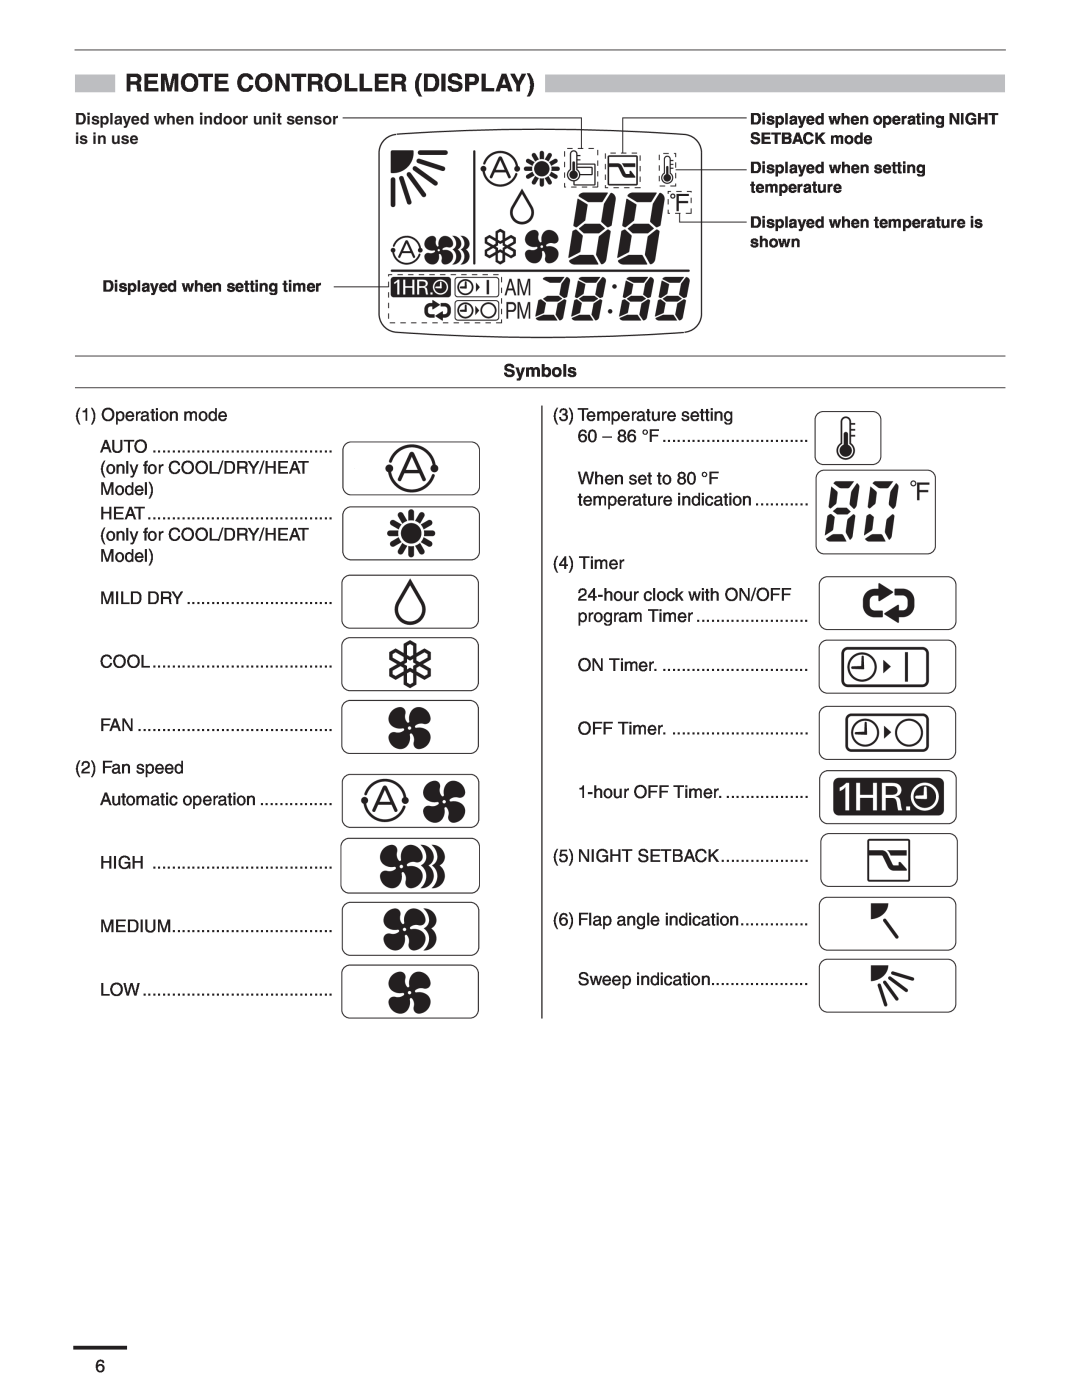 Panasonic CS-MKE12NB4U, CS-MKE9NB4U Remote Controller Display, Symbols, 1Operation mode AUTO only for COOL/DRY/HEAT Model 